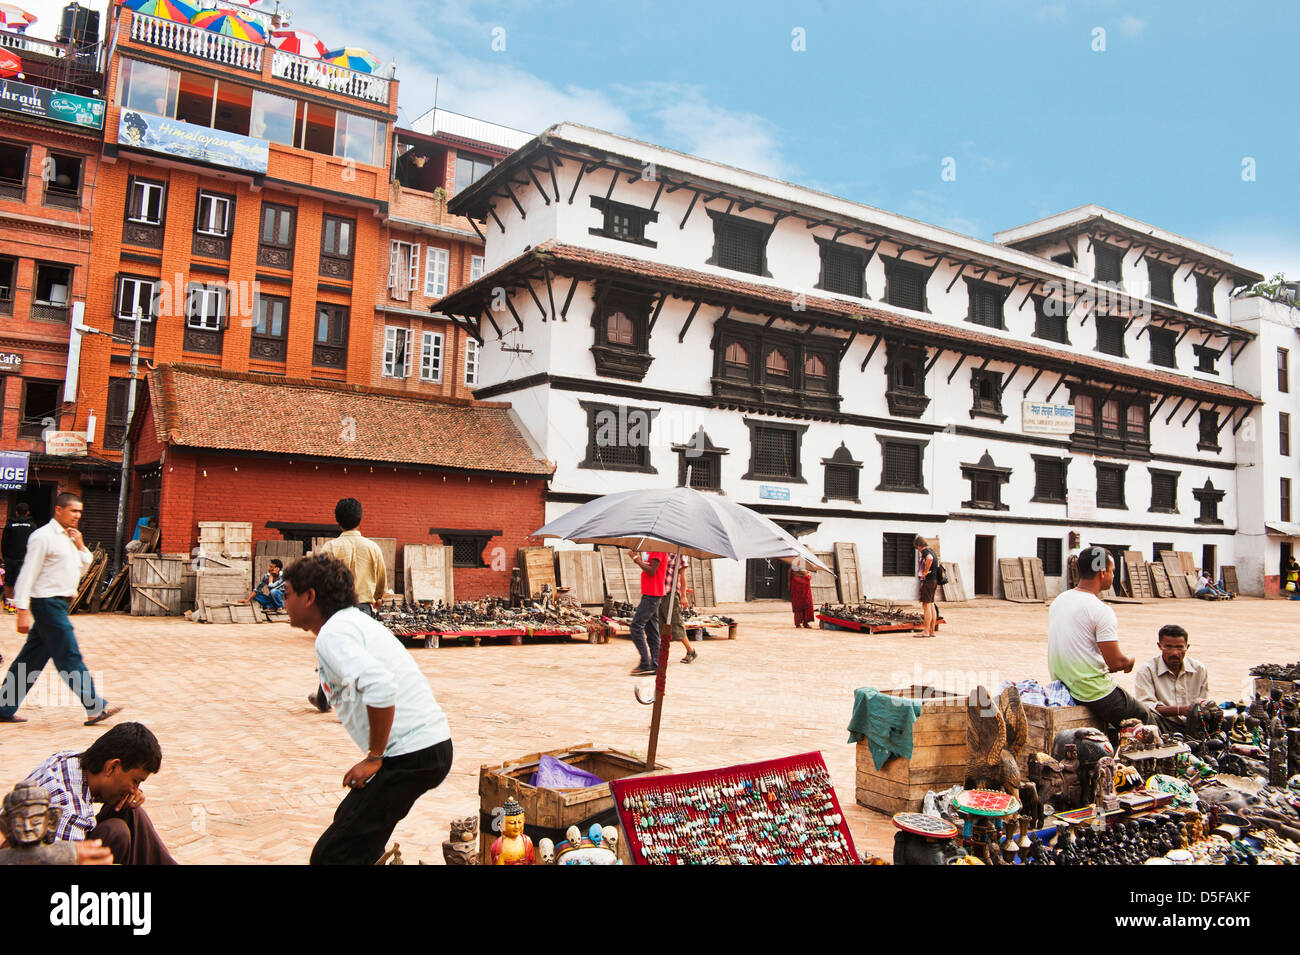 Market stalls in a street market, Hanuman Dhoka, Durbar Square, Kathmandu, Nepal Stock Photo